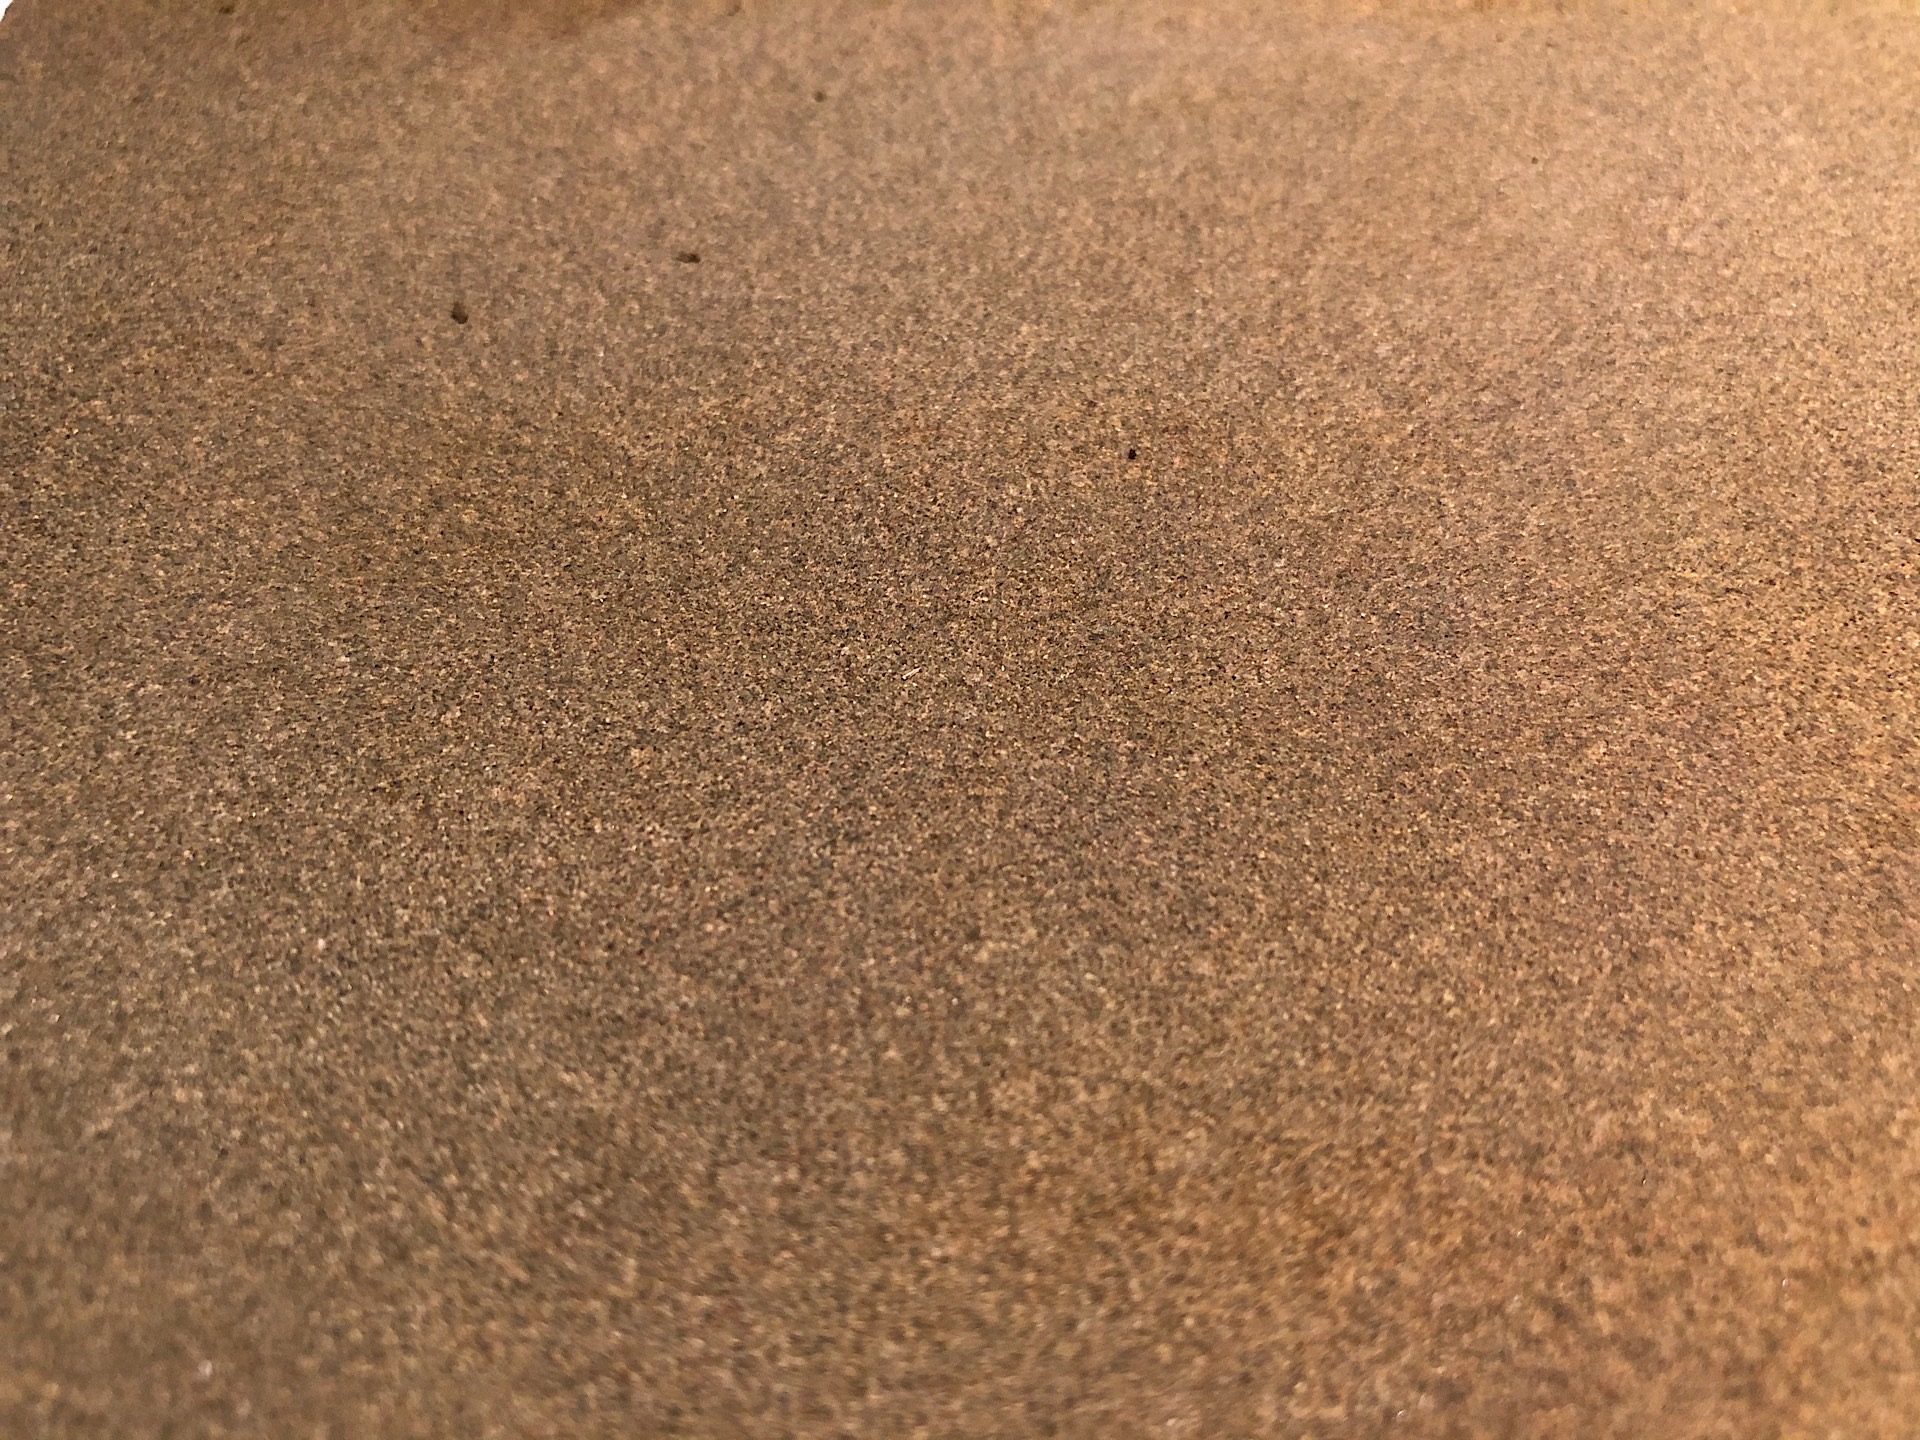 Sandstone sharpening whetstone grain